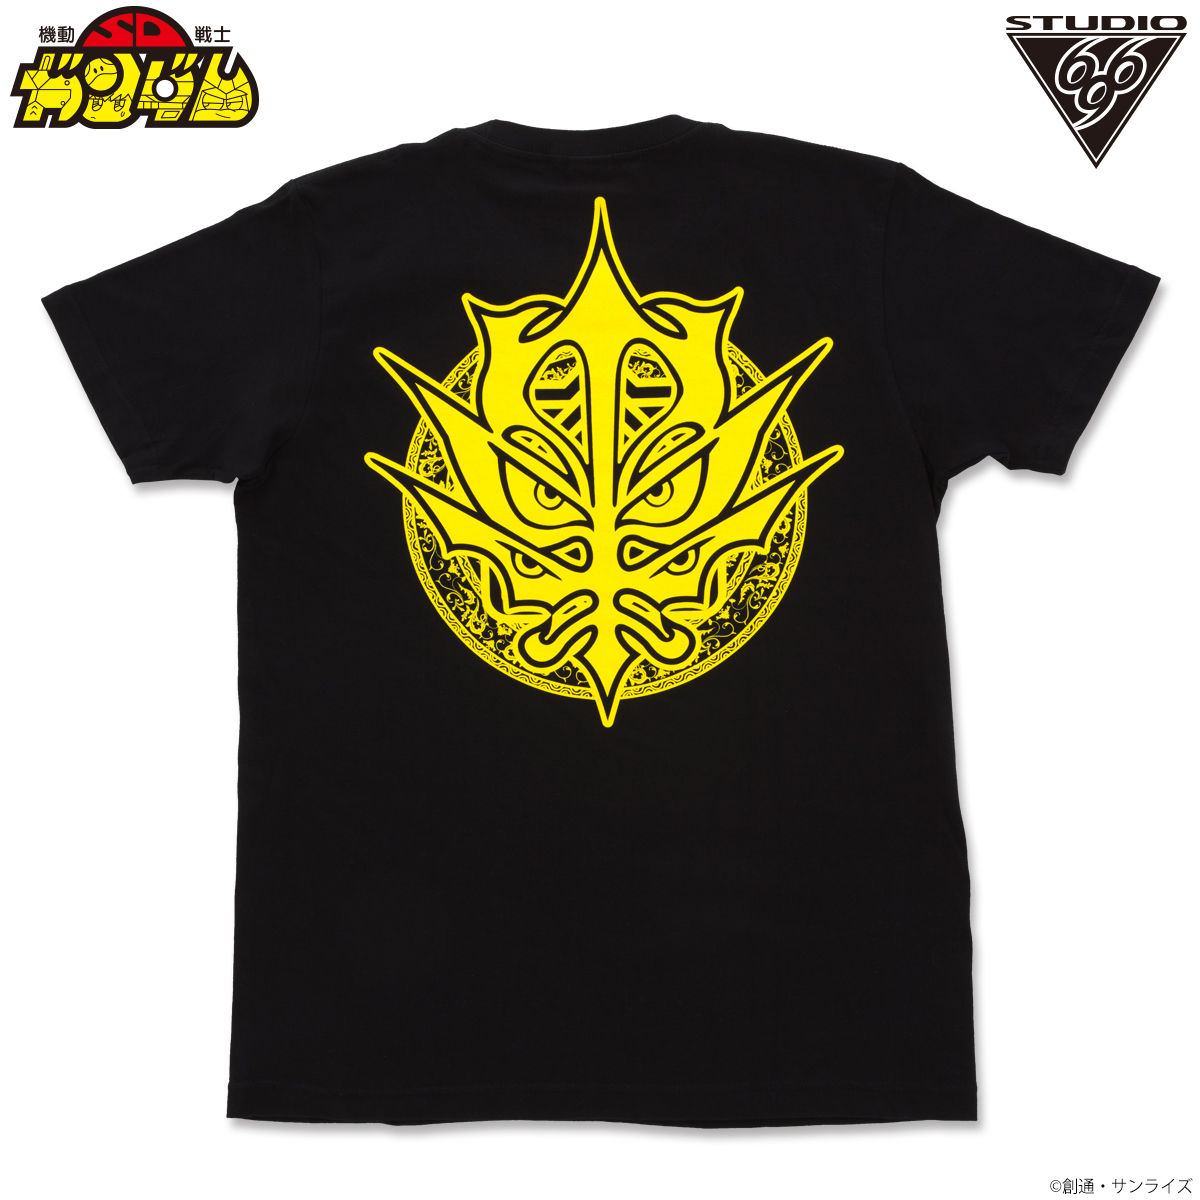 Black Dragon feat. STUDIO696 T-shirt